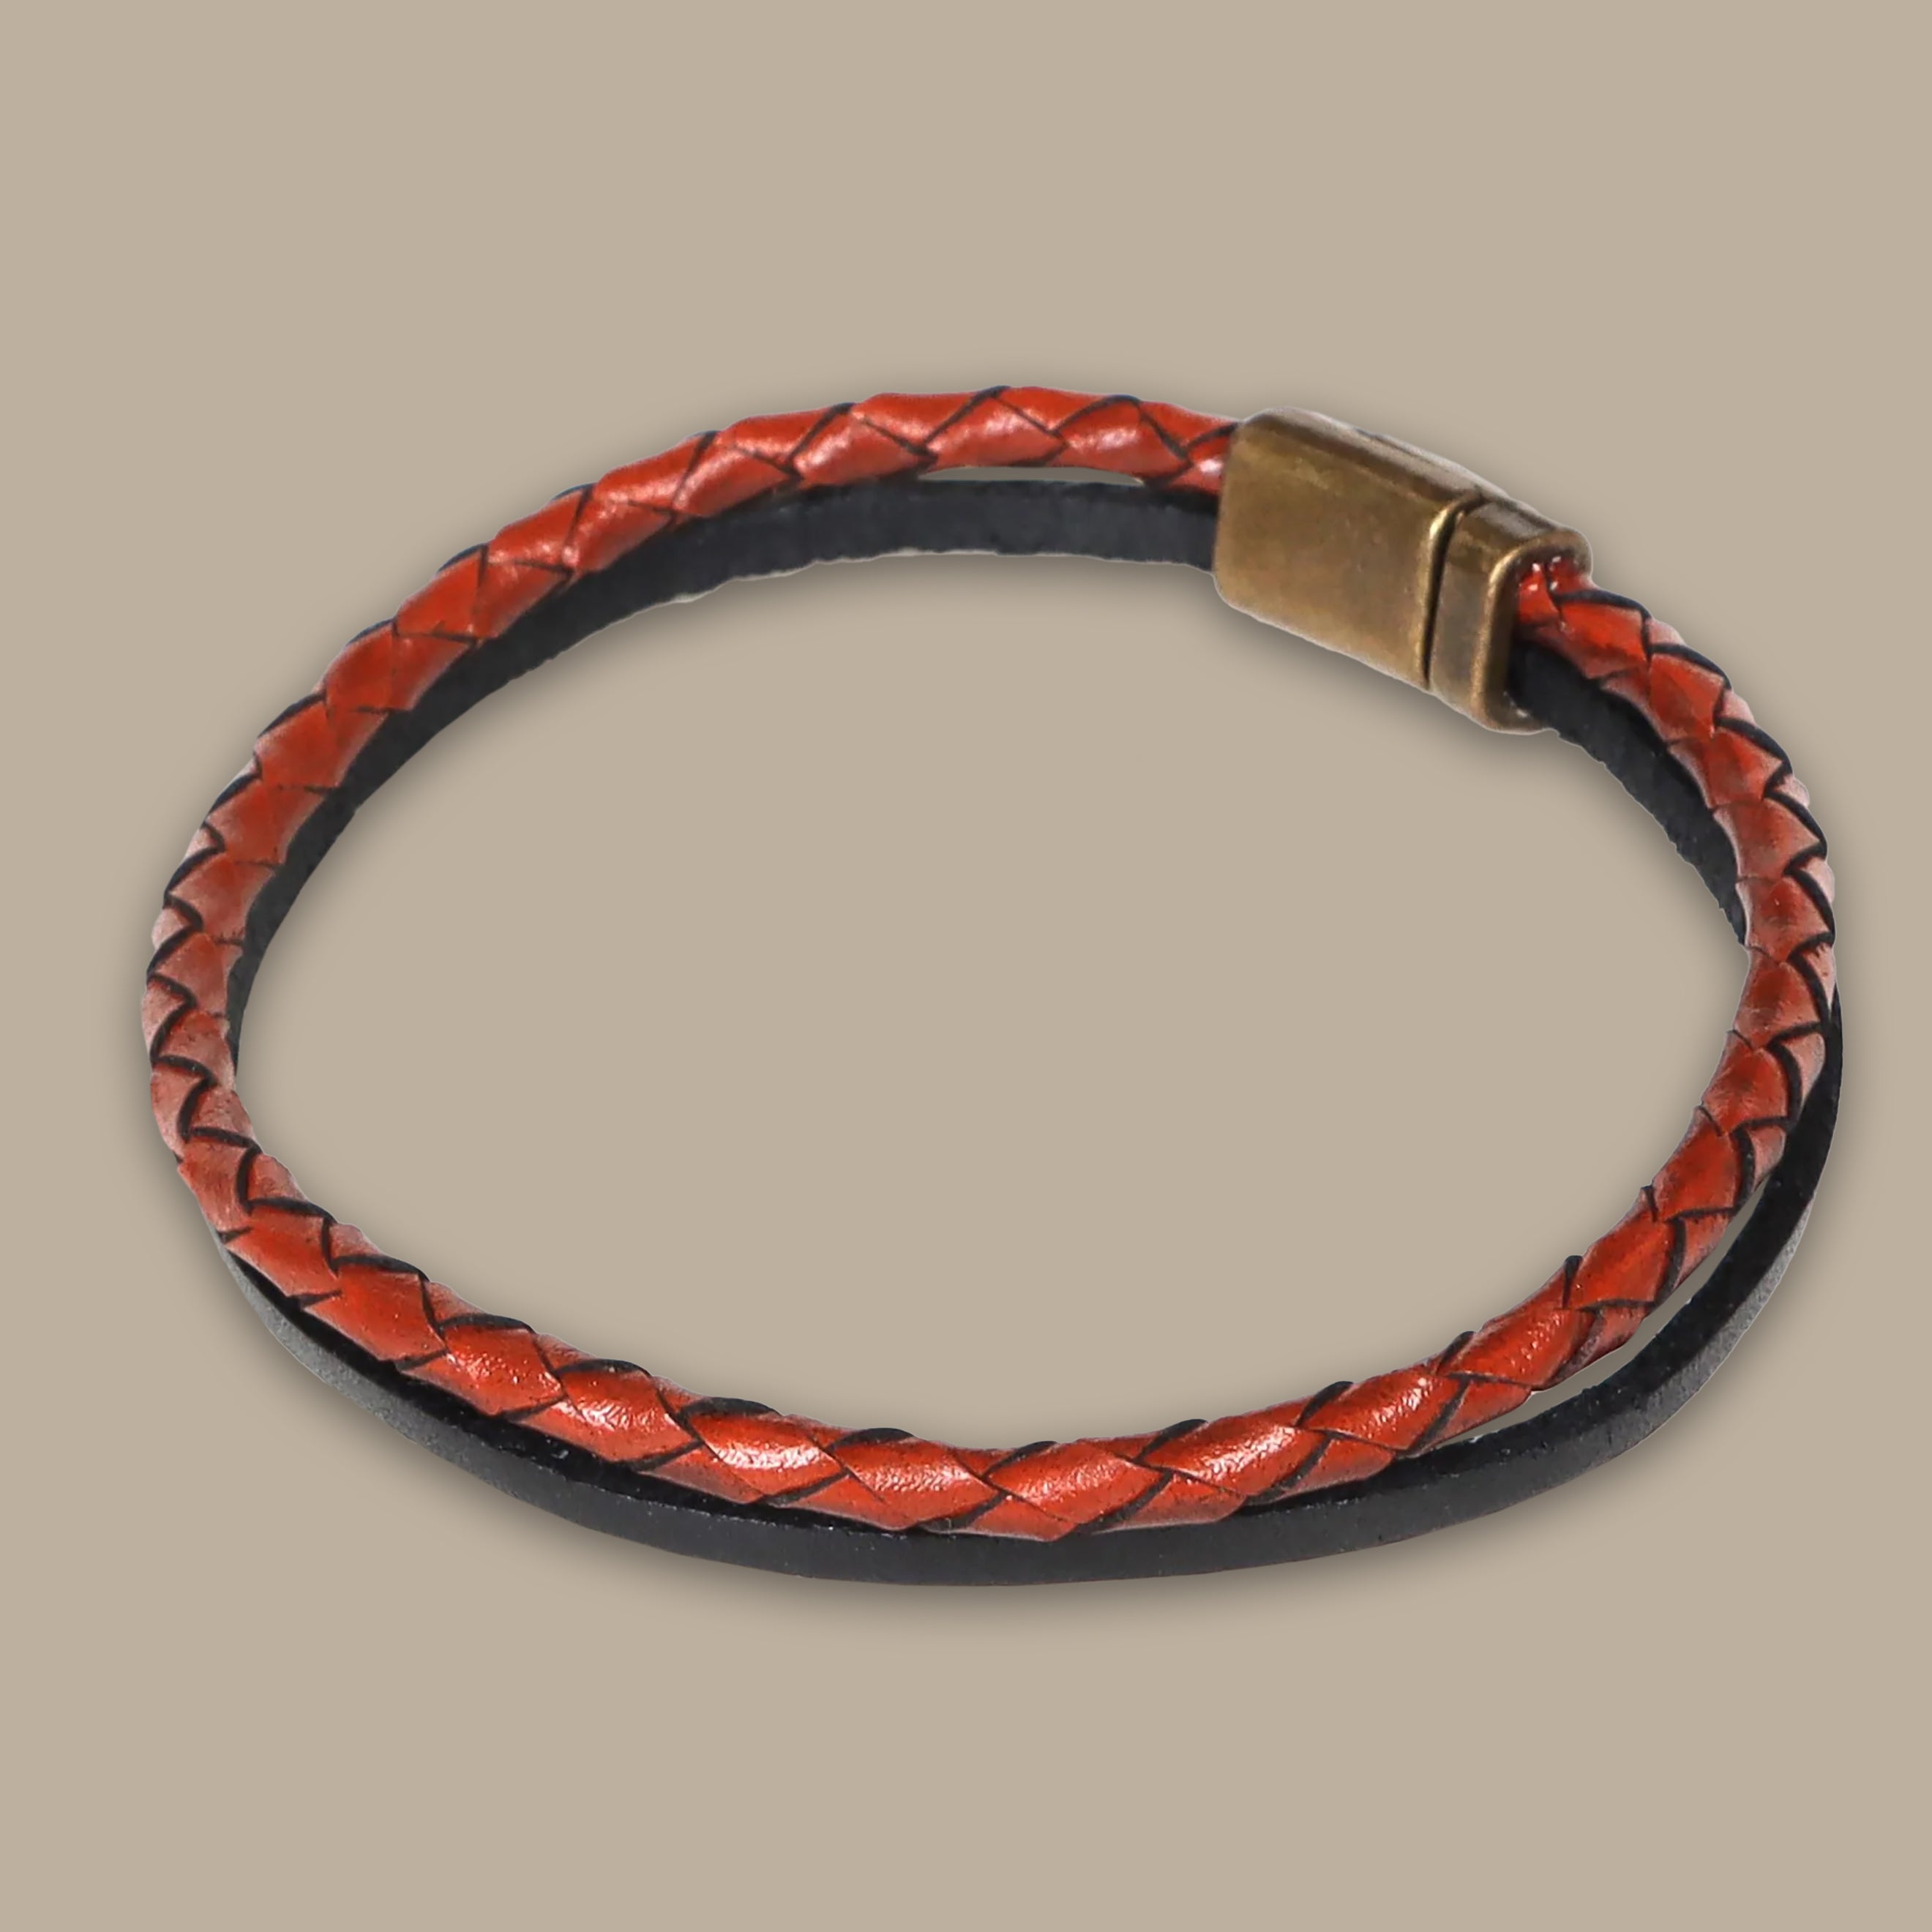 Bracelet 2 layers / 1 Braided | Black